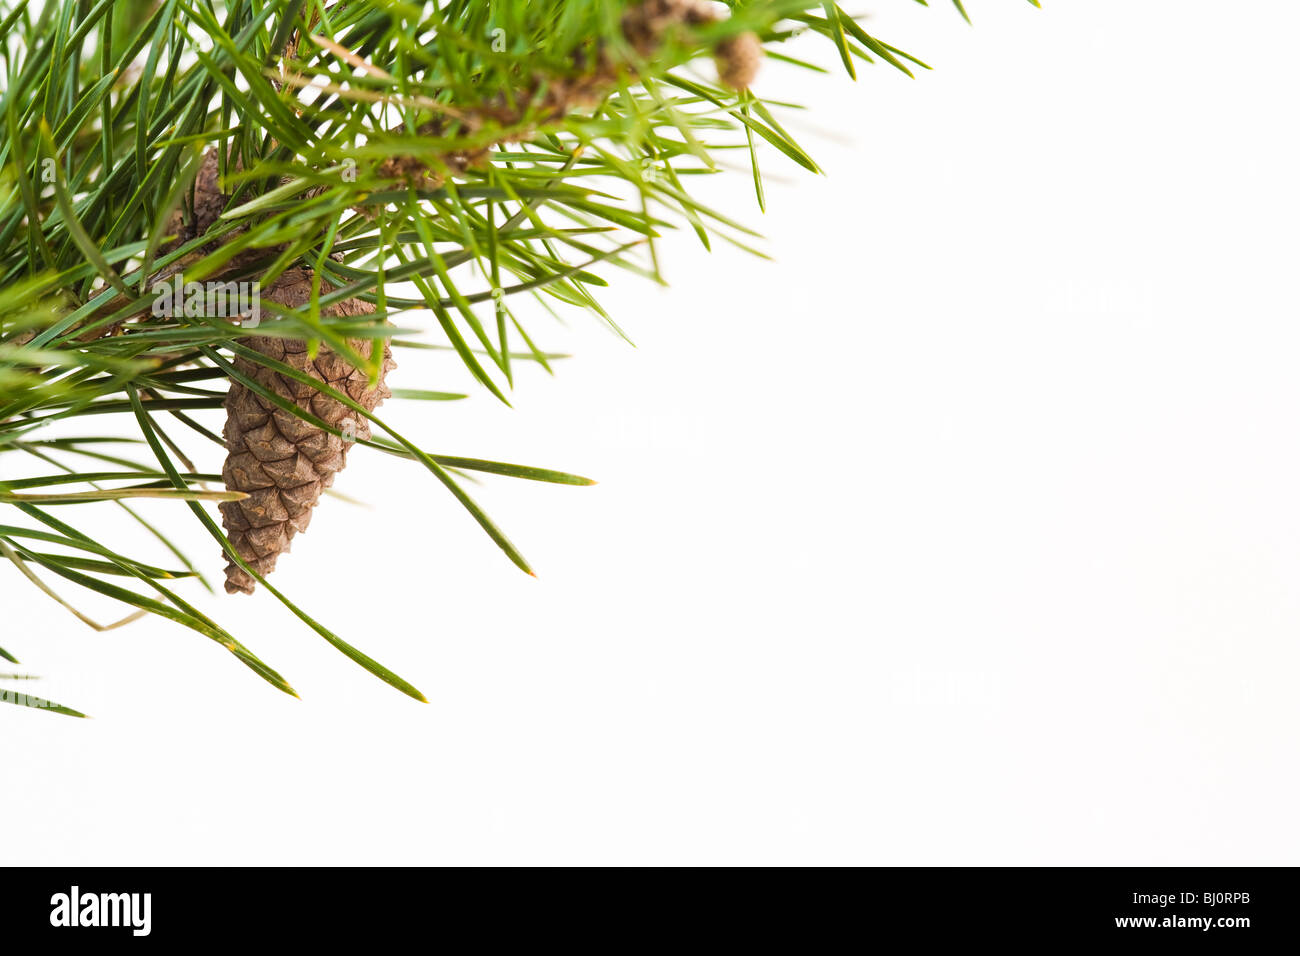 pine tree with pine cone Stock Photo